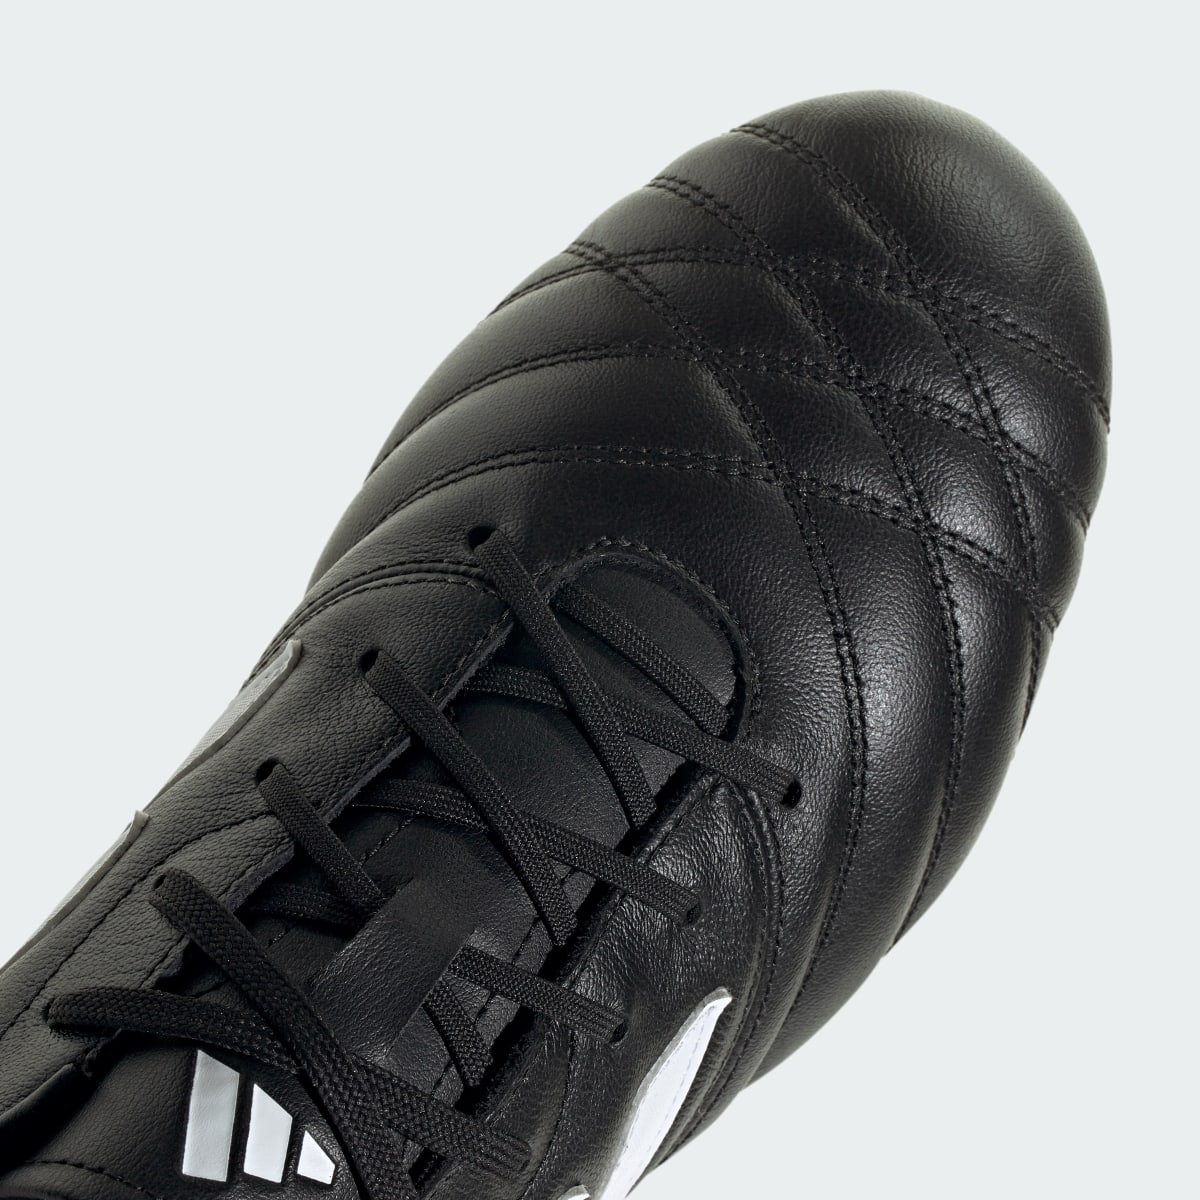 Adidas Copa Gloro Soft Ground Boots. 10